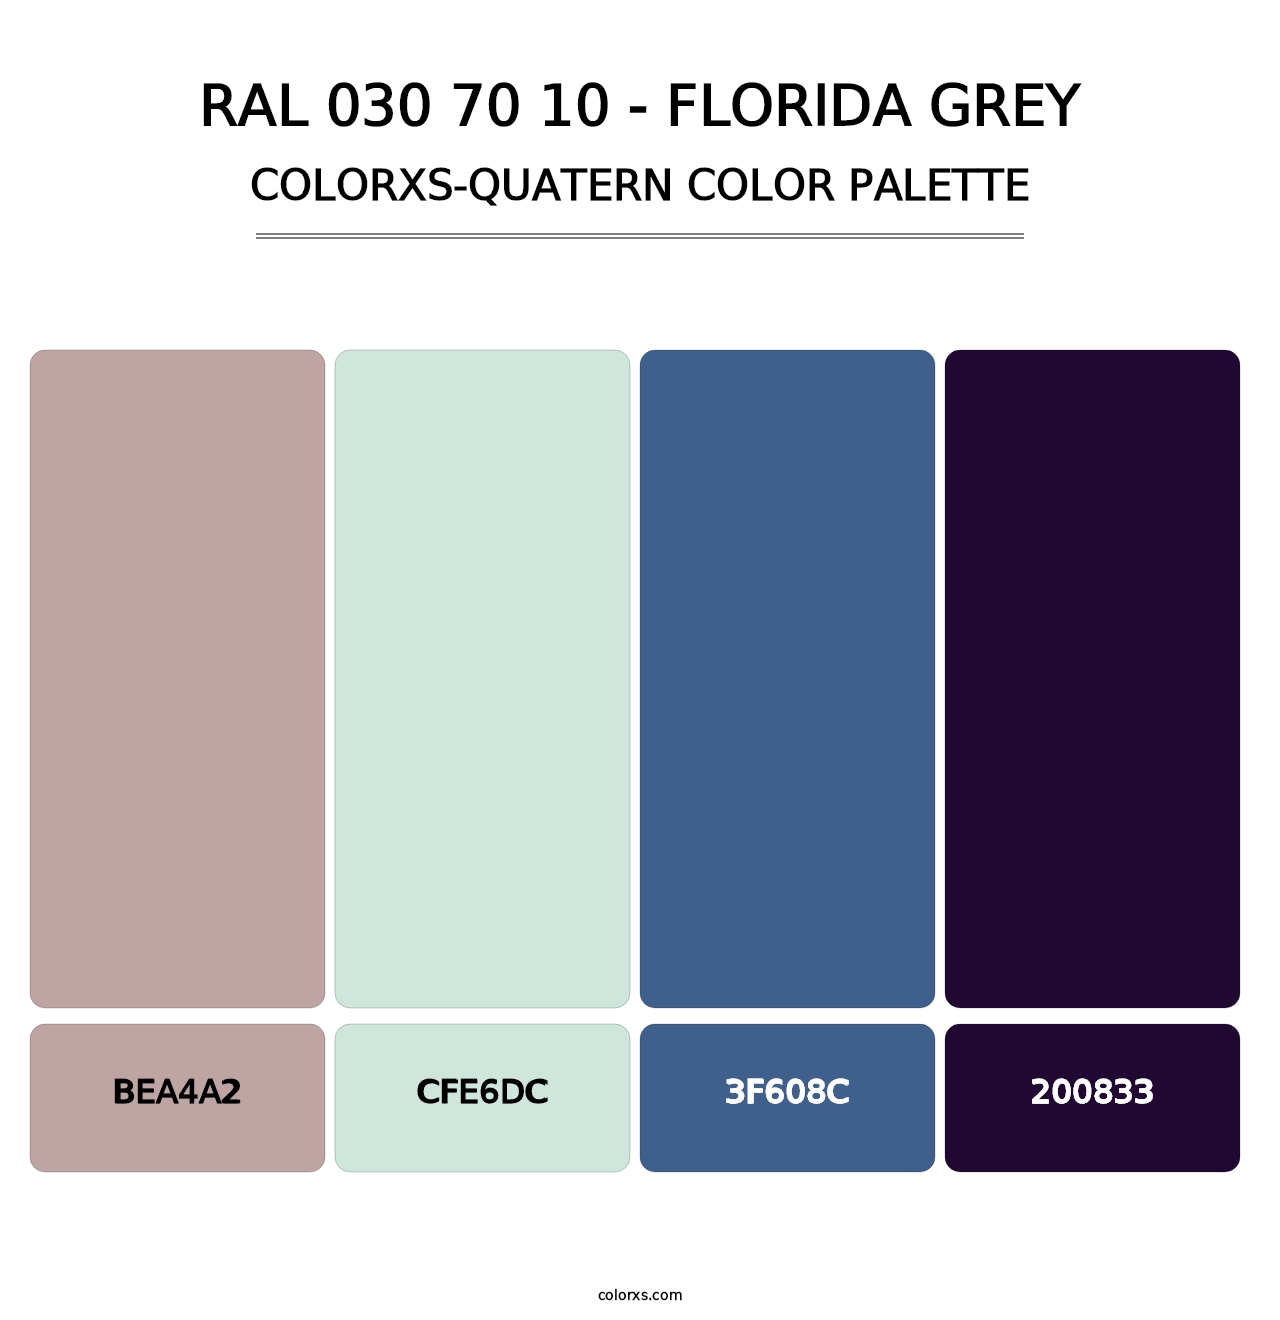 RAL 030 70 10 - Florida Grey - Colorxs Quatern Palette